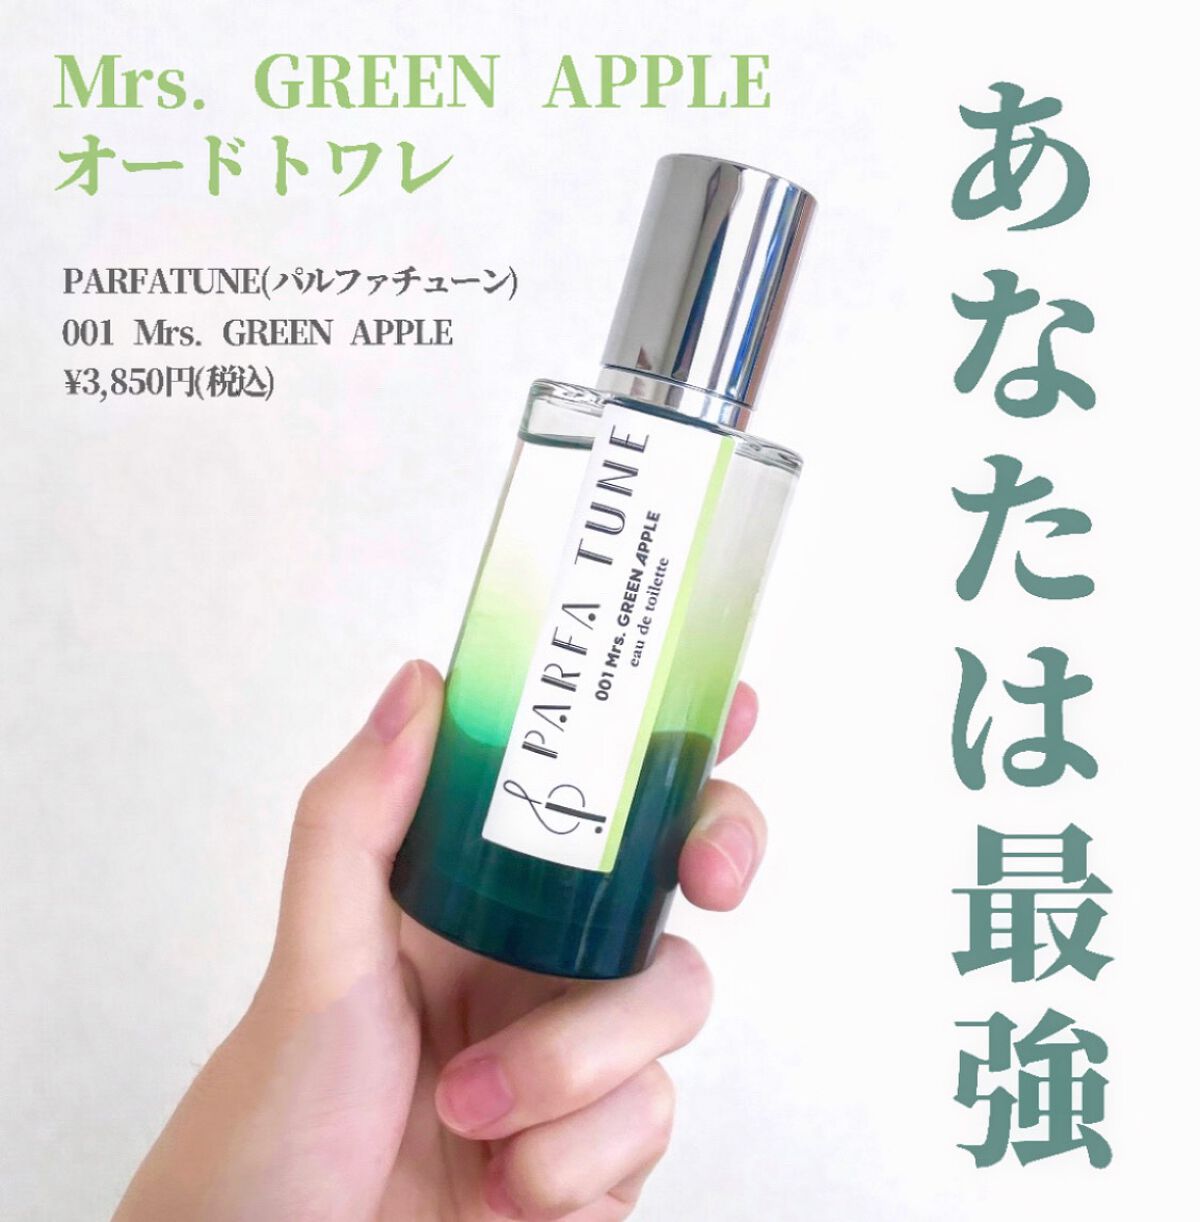 Mrs. GREEN APPLE パルファチューン001 初回限定盤+新品香水